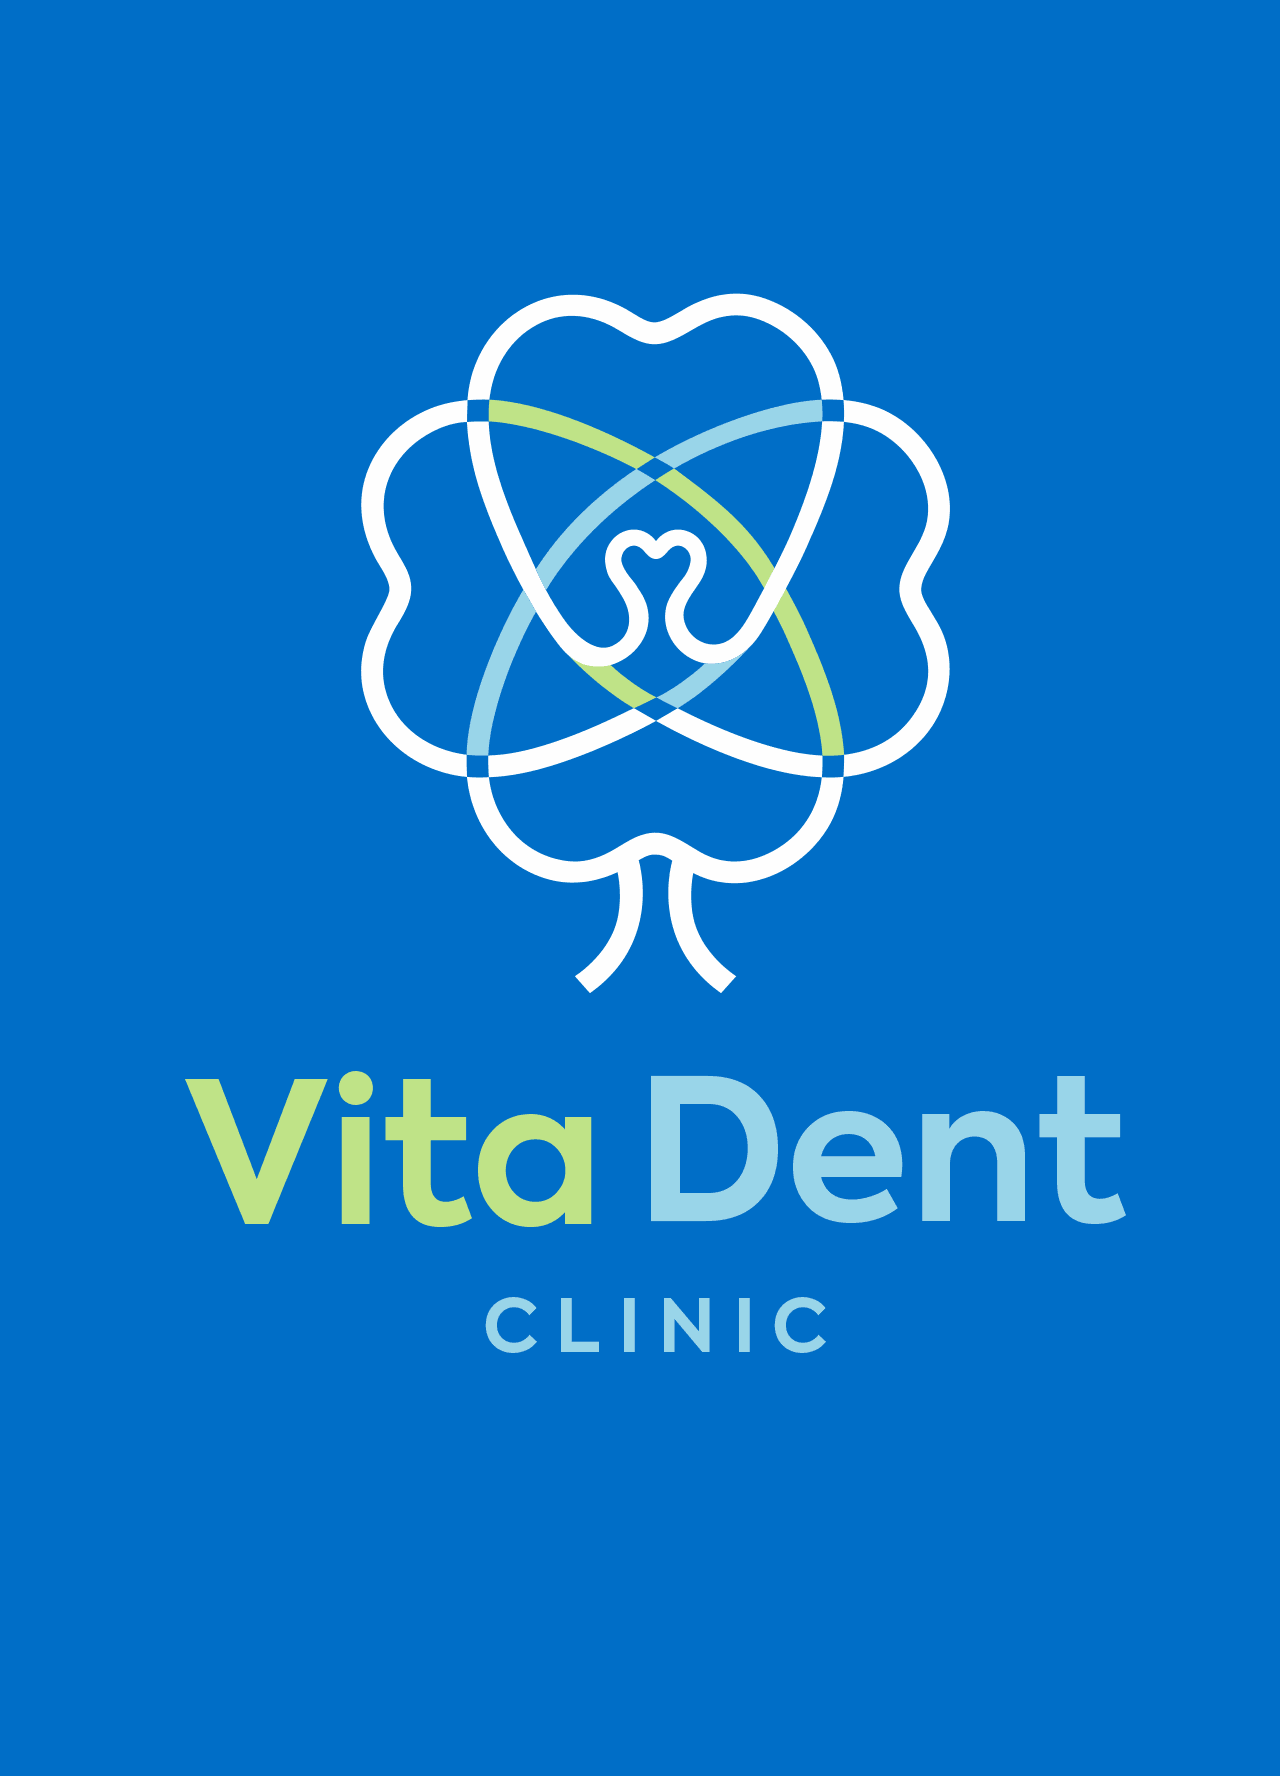 логотип стоматологической клиники VitaDent